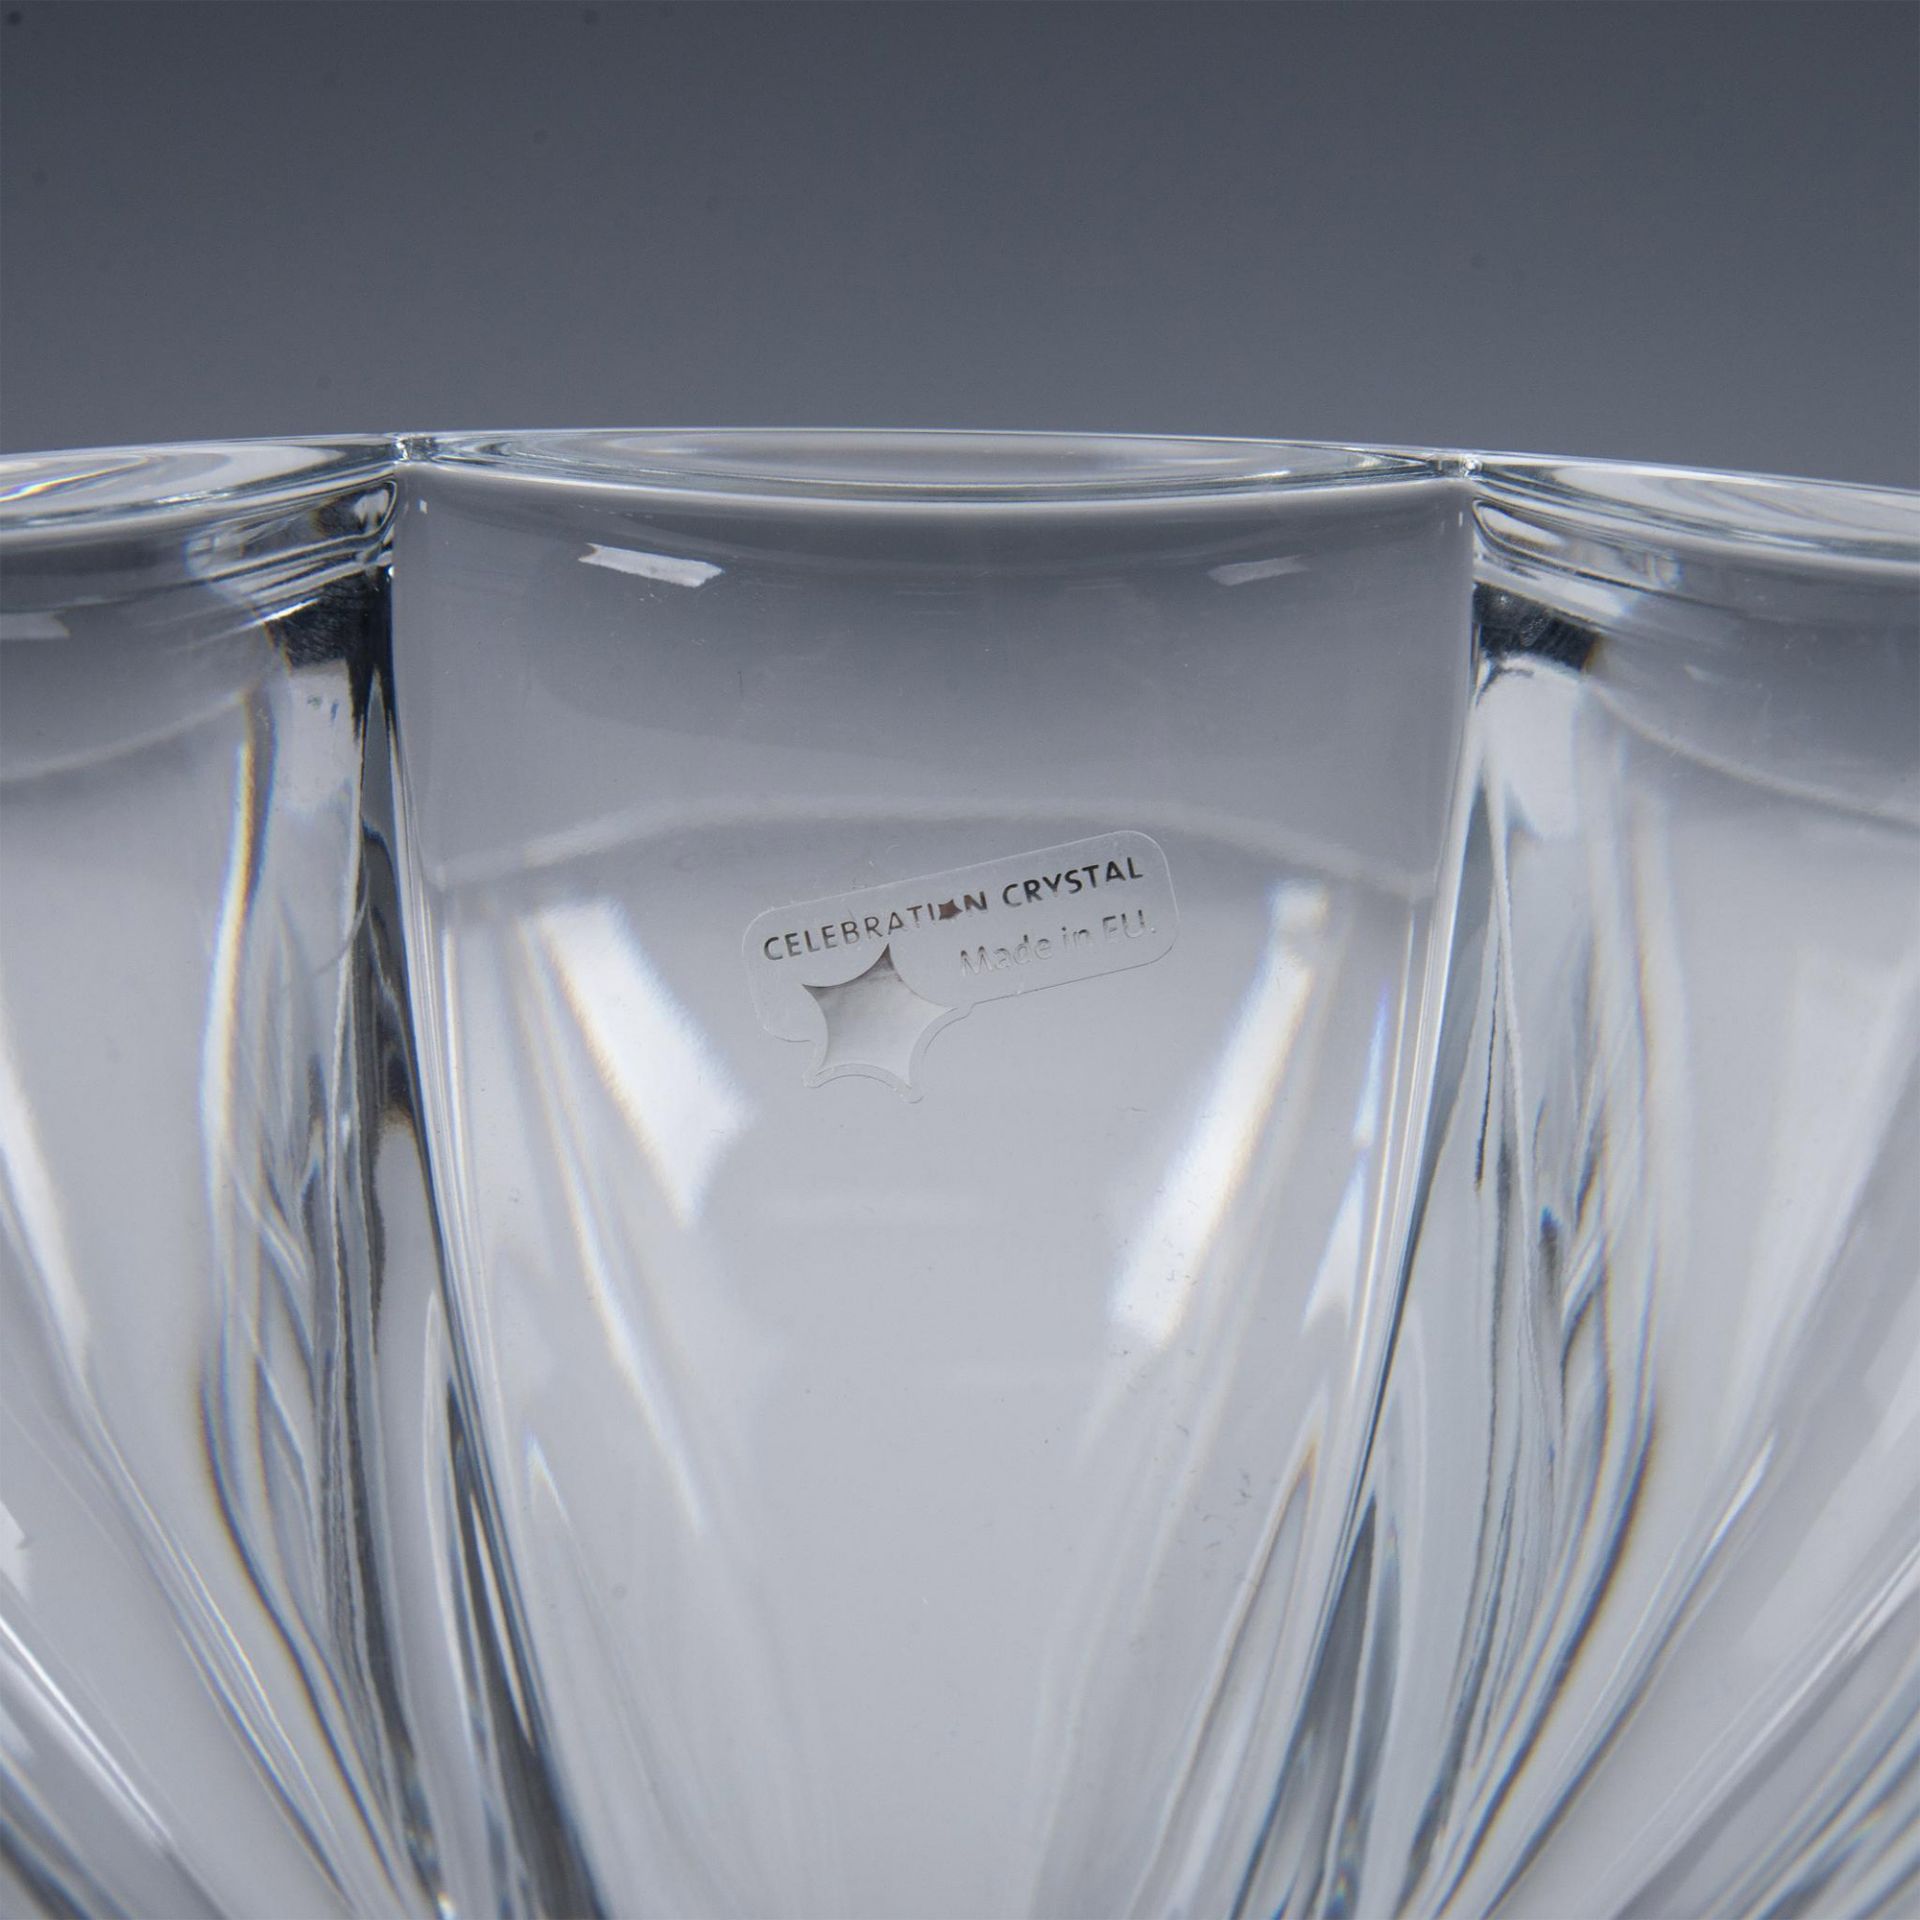 Celebration Crystal Centerpiece Bowl - Image 2 of 4